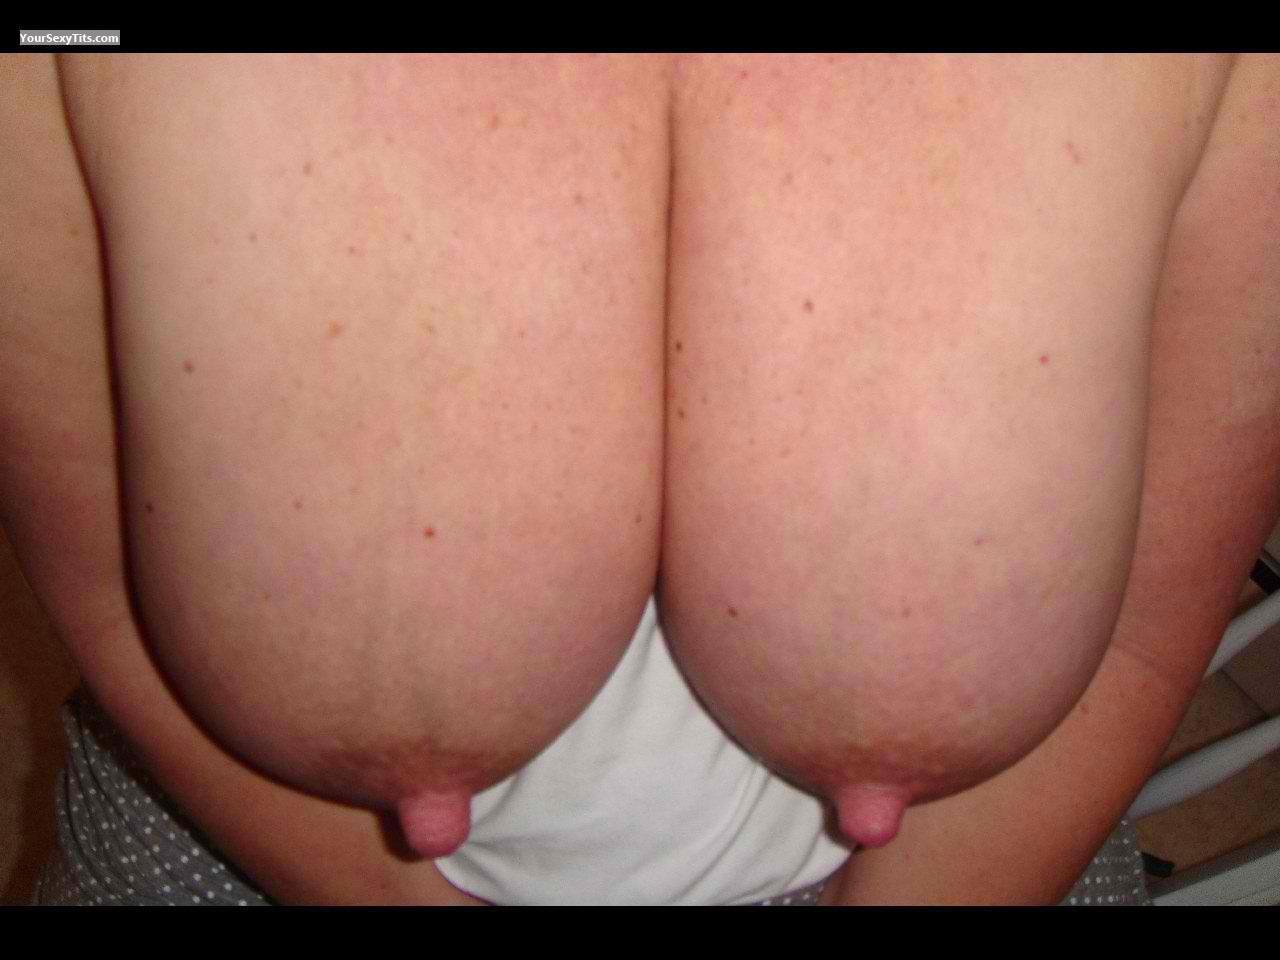 Tit Flash: My Very Big Tits - 41 Y/o Milf from United States